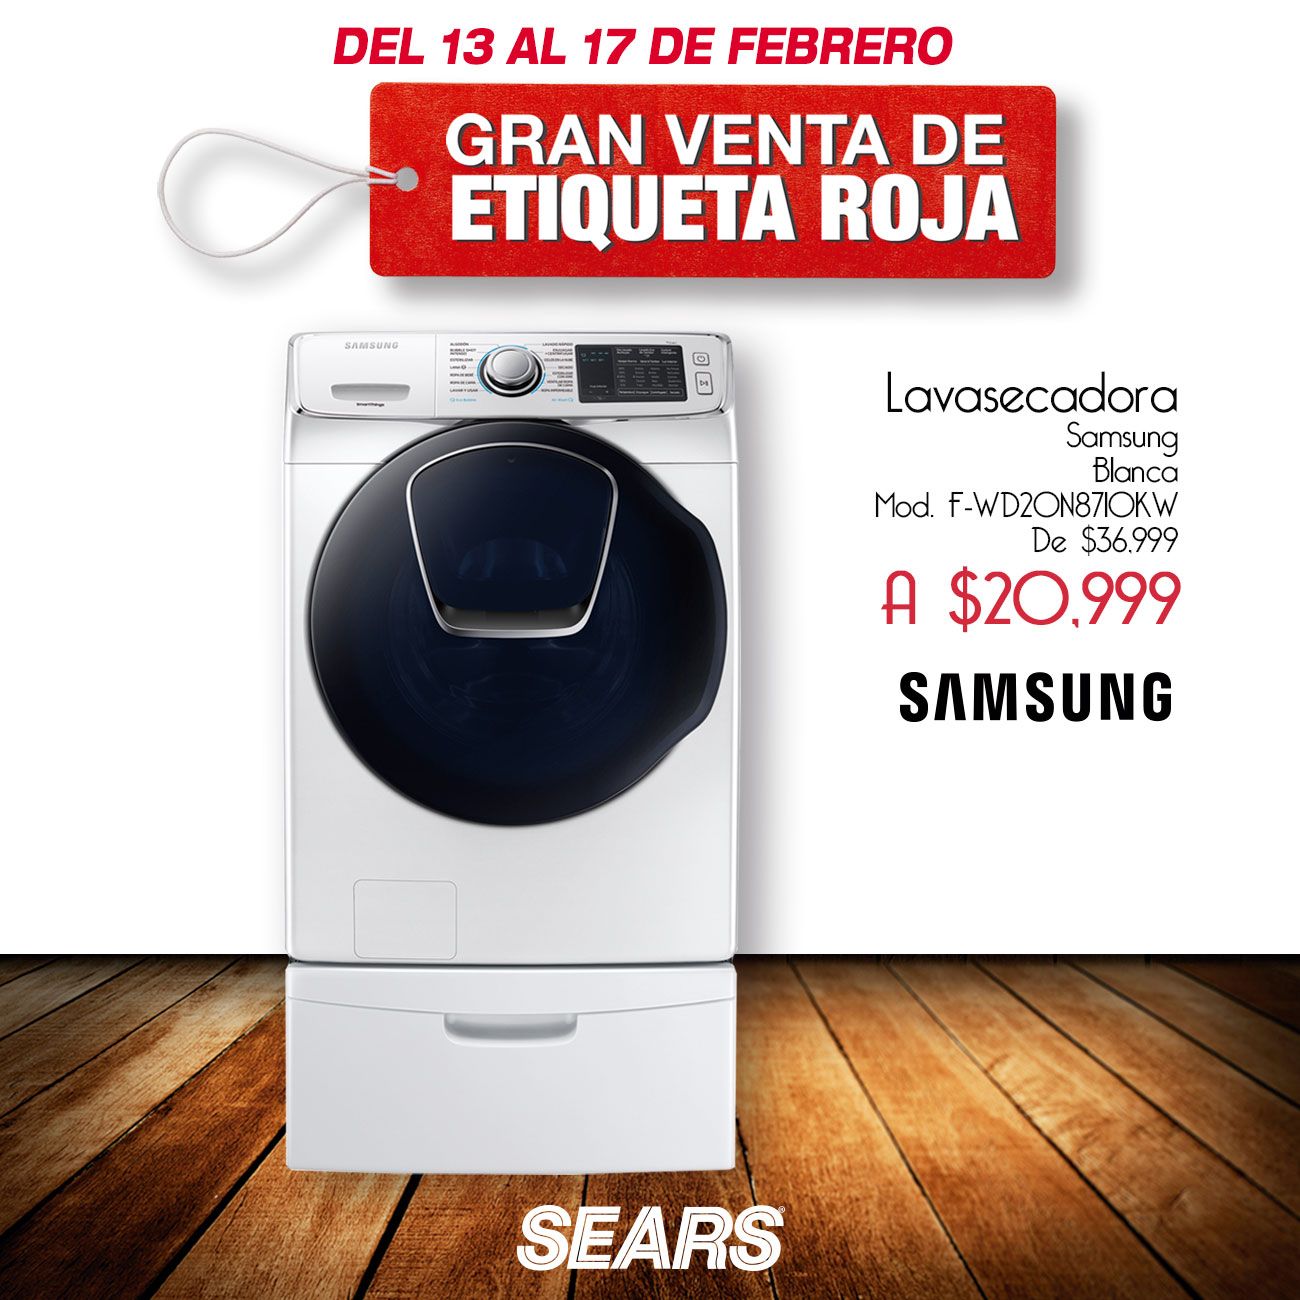 Sears on Twitter: "Adquiere esta lavasecadora #Samsung a un súper precio. 😉 #SearsMeEntiende https://t.co/JMmTpNO5bC" / Twitter